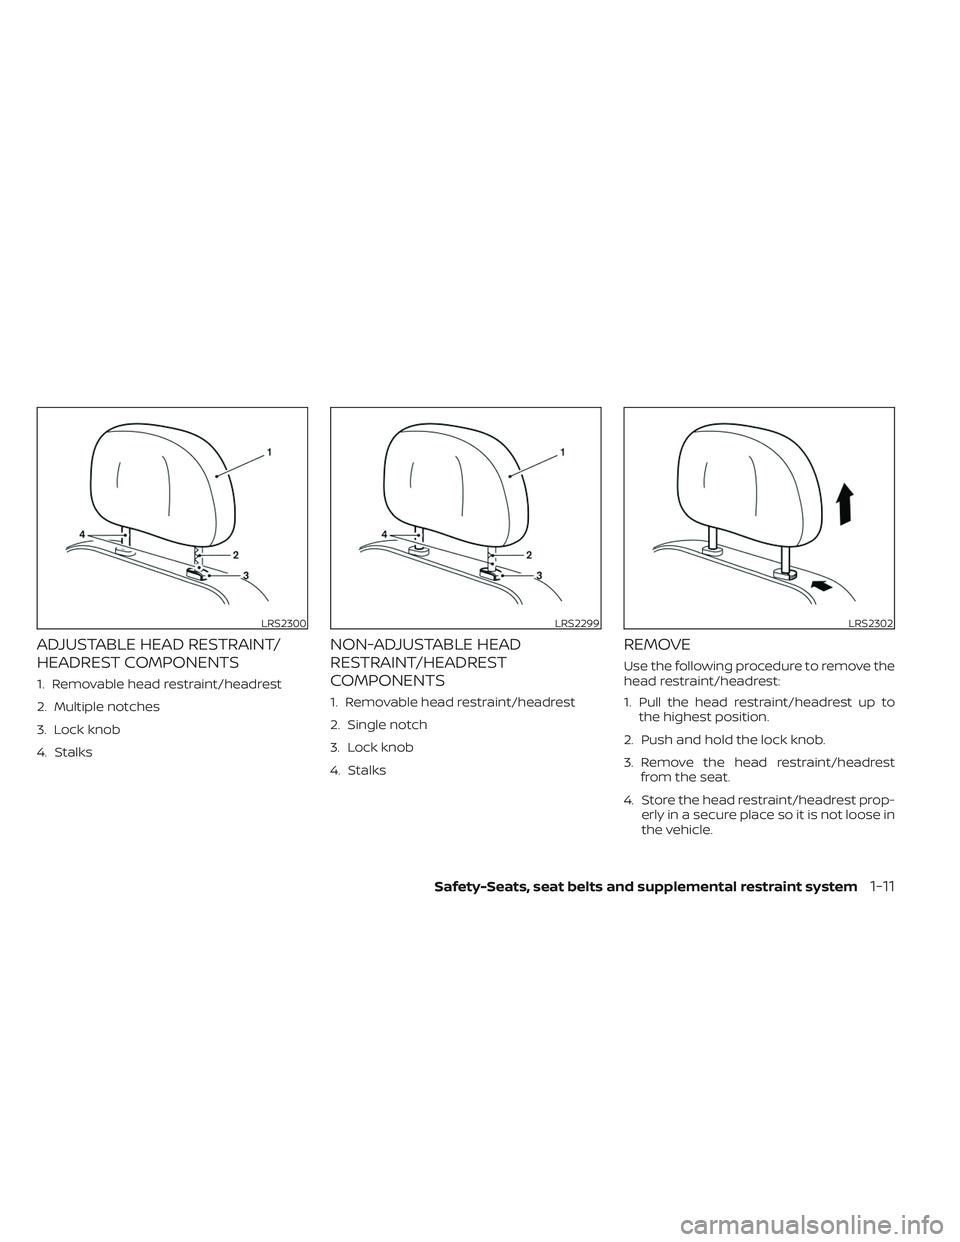 NISSAN FRONTIER 2023  Owners Manual ADJUSTABLE HEAD RESTRAINT/
HEADREST COMPONENTS
1. Removable head restraint/headrest
2. Multiple notches
3. Lock knob
4. Stalks
NON-ADJUSTABLE HEAD
RESTRAINT/HEADREST
COMPONENTS
1. Removable head restr